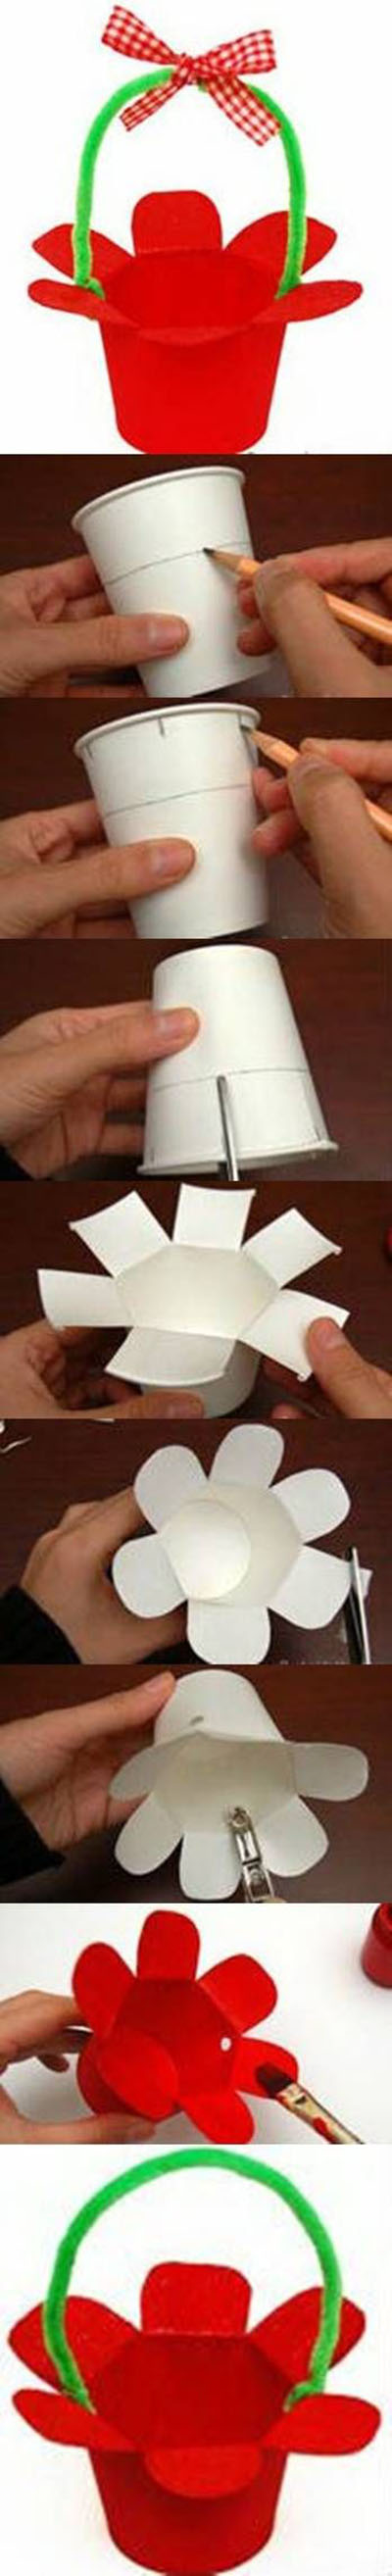 19  DIY Paper Cup Basket6d3